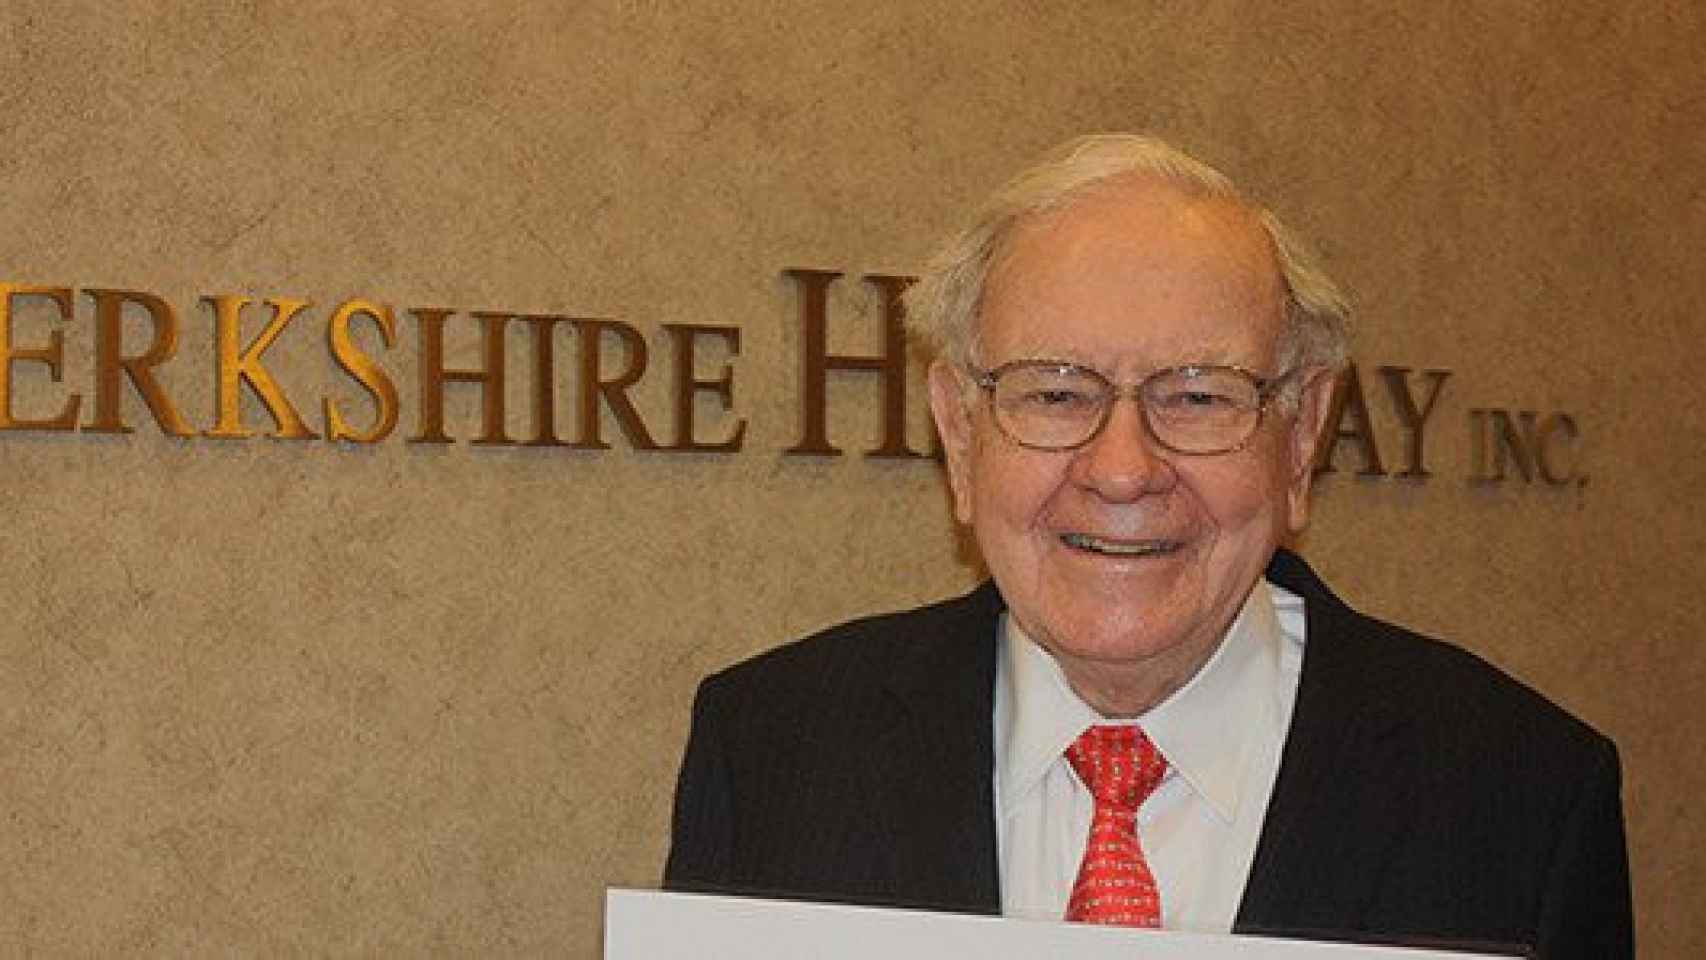 El empresario e inversor estadounidense Warren Buffett